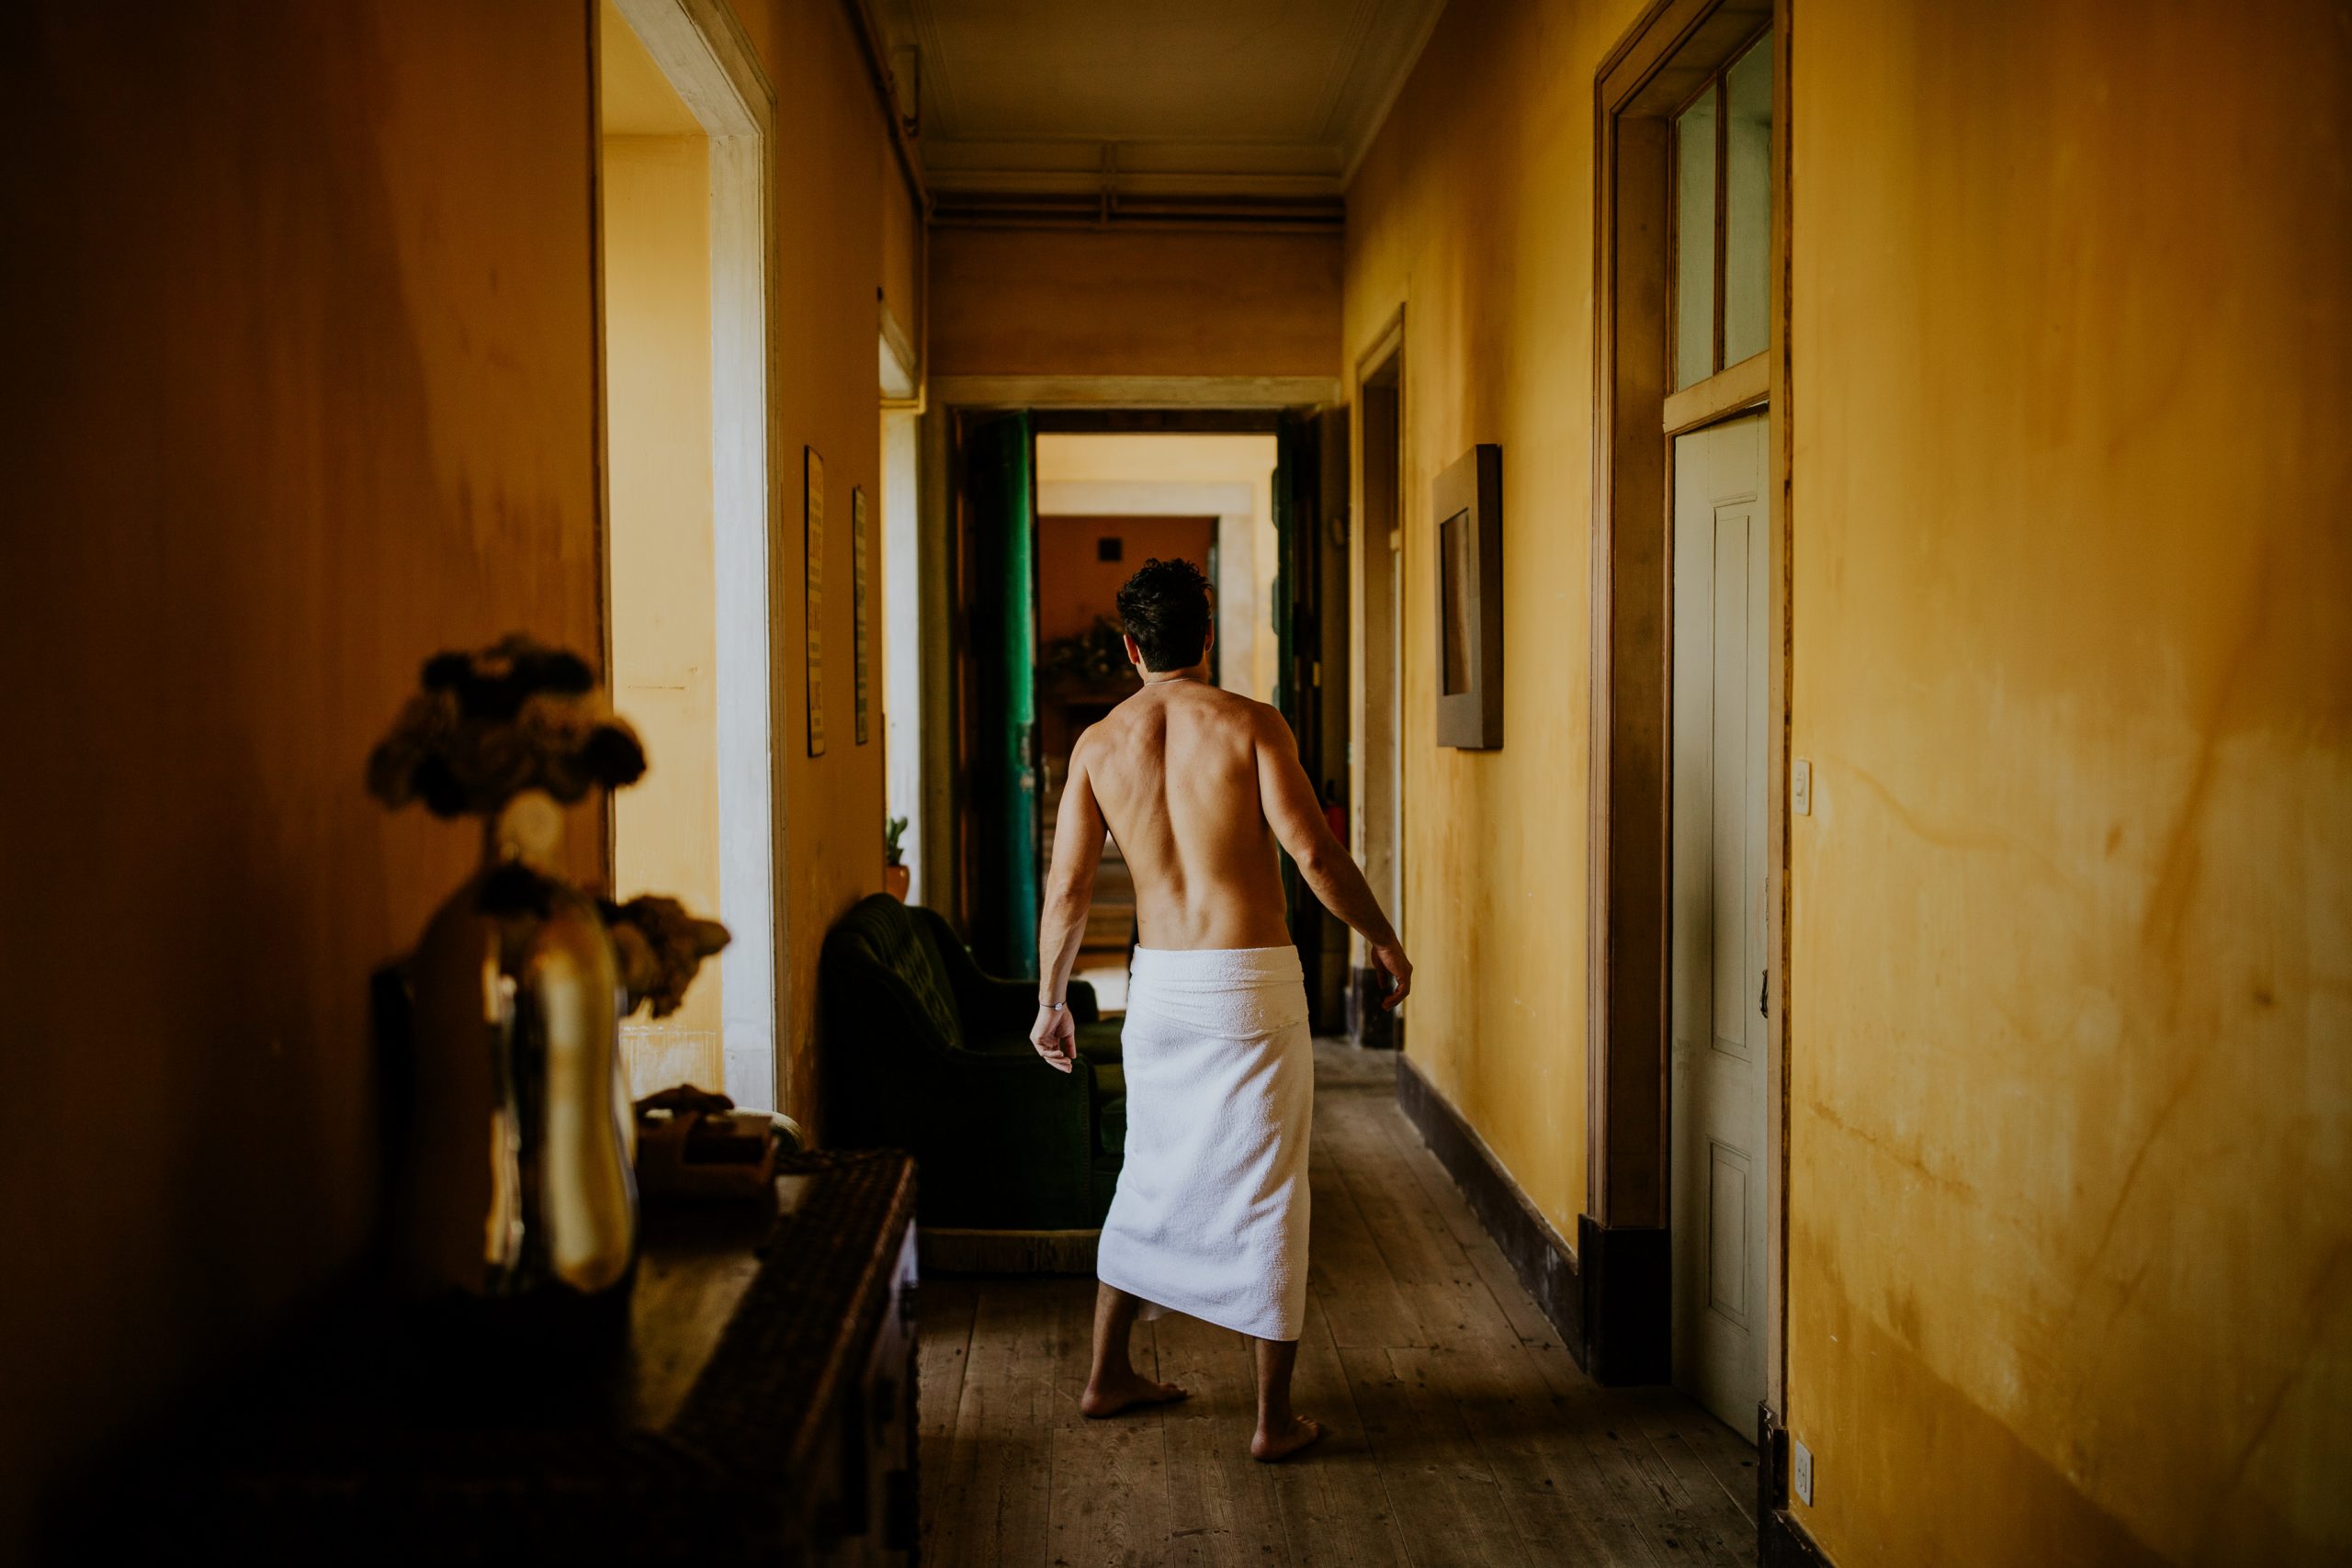 man half naked on the corridor with the bath towel